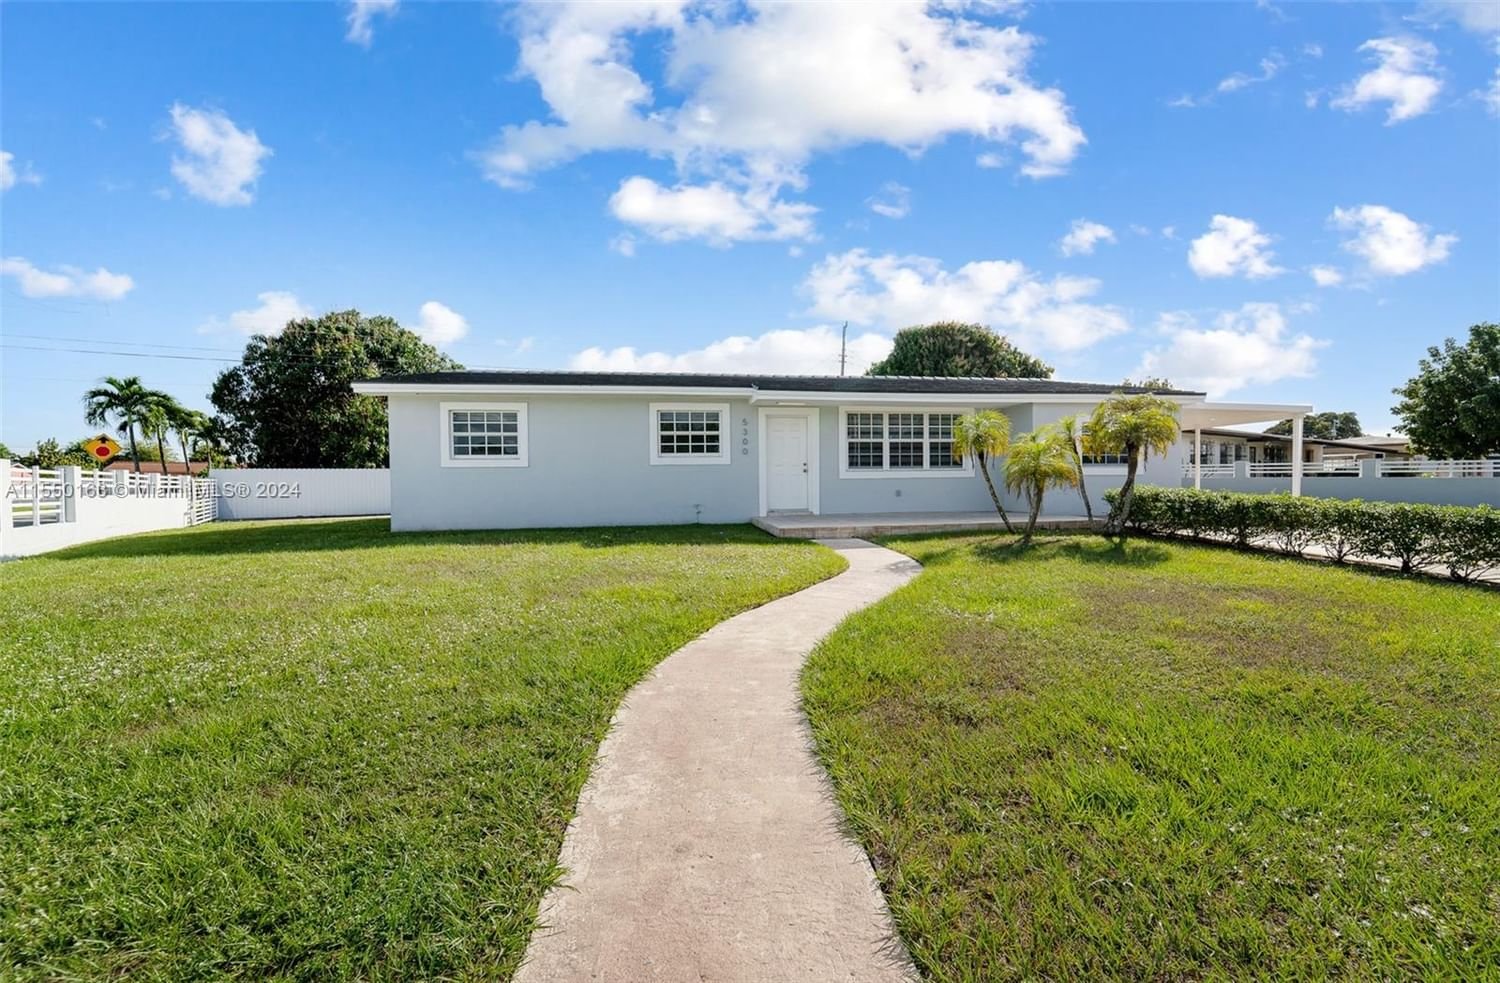 Real estate property located at 5300 183rd St, Miami-Dade County, CAROL CITY LAKE STEVEN ES, Miami Gardens, FL